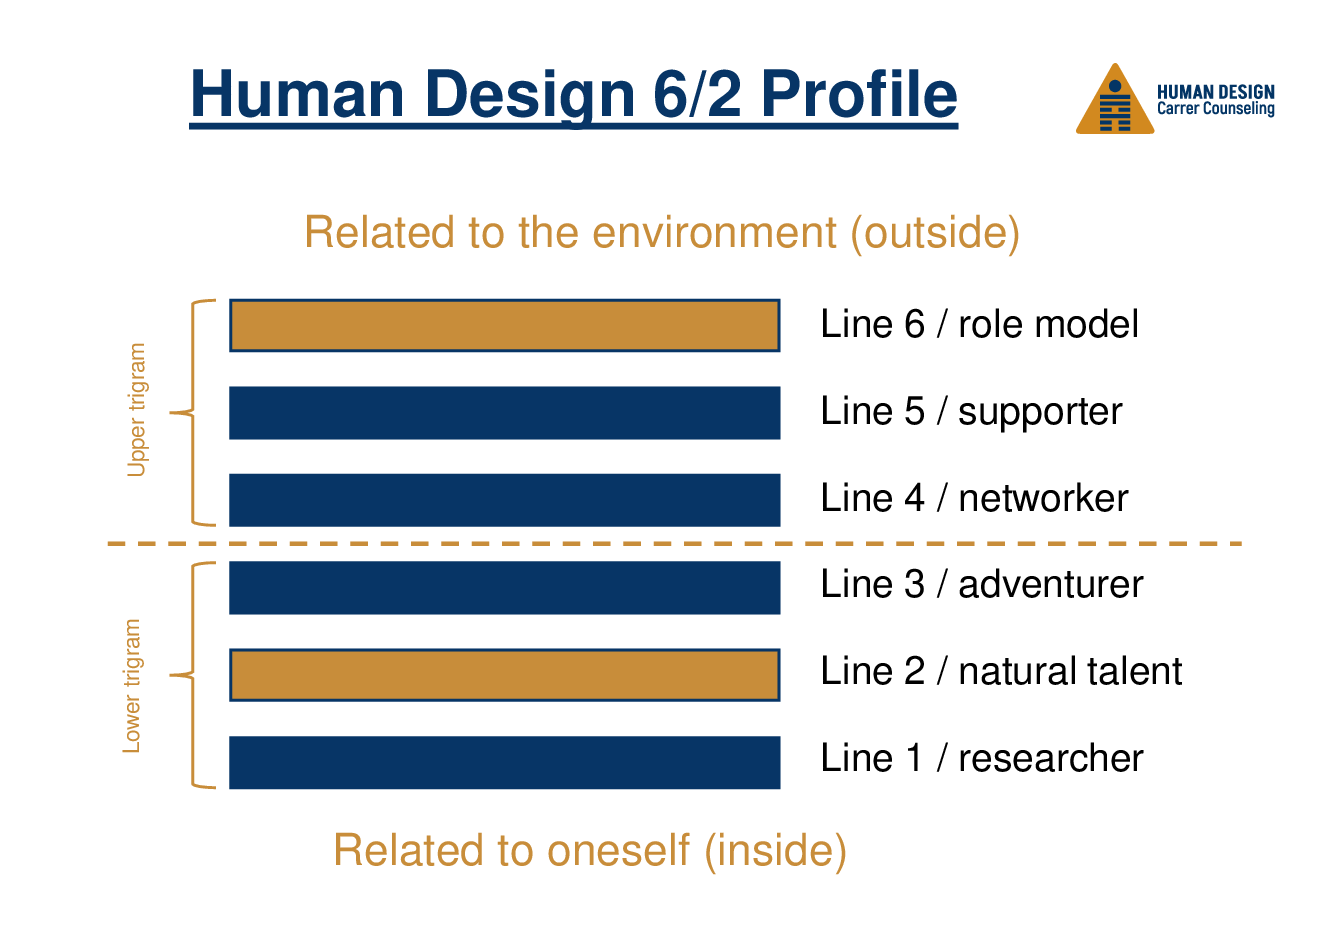 Human Design 6/2 Profile on the job